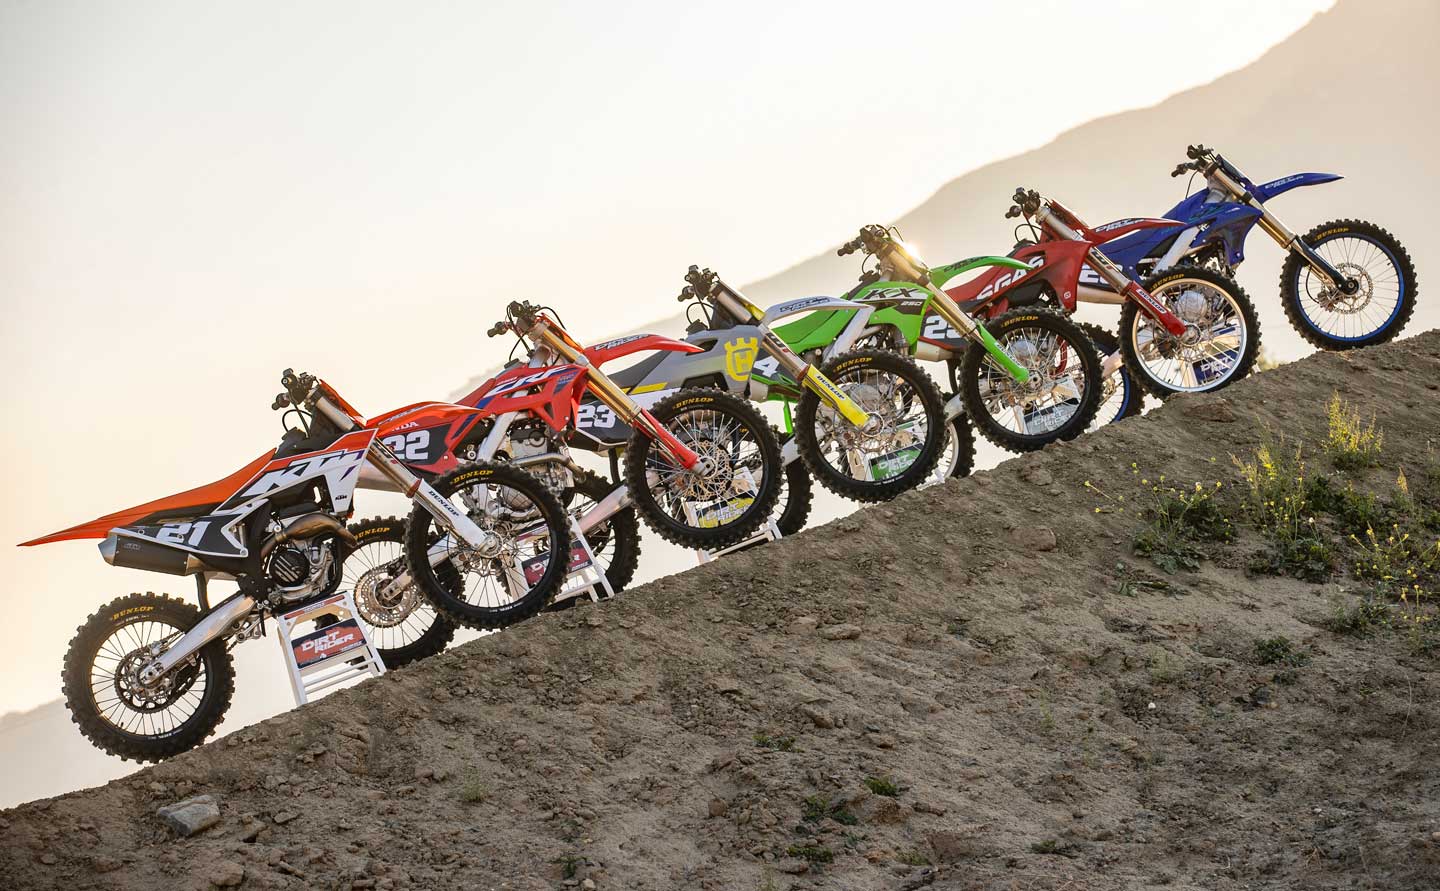 Motocross, Dirt Bike, Enduro, Supercross, Racing